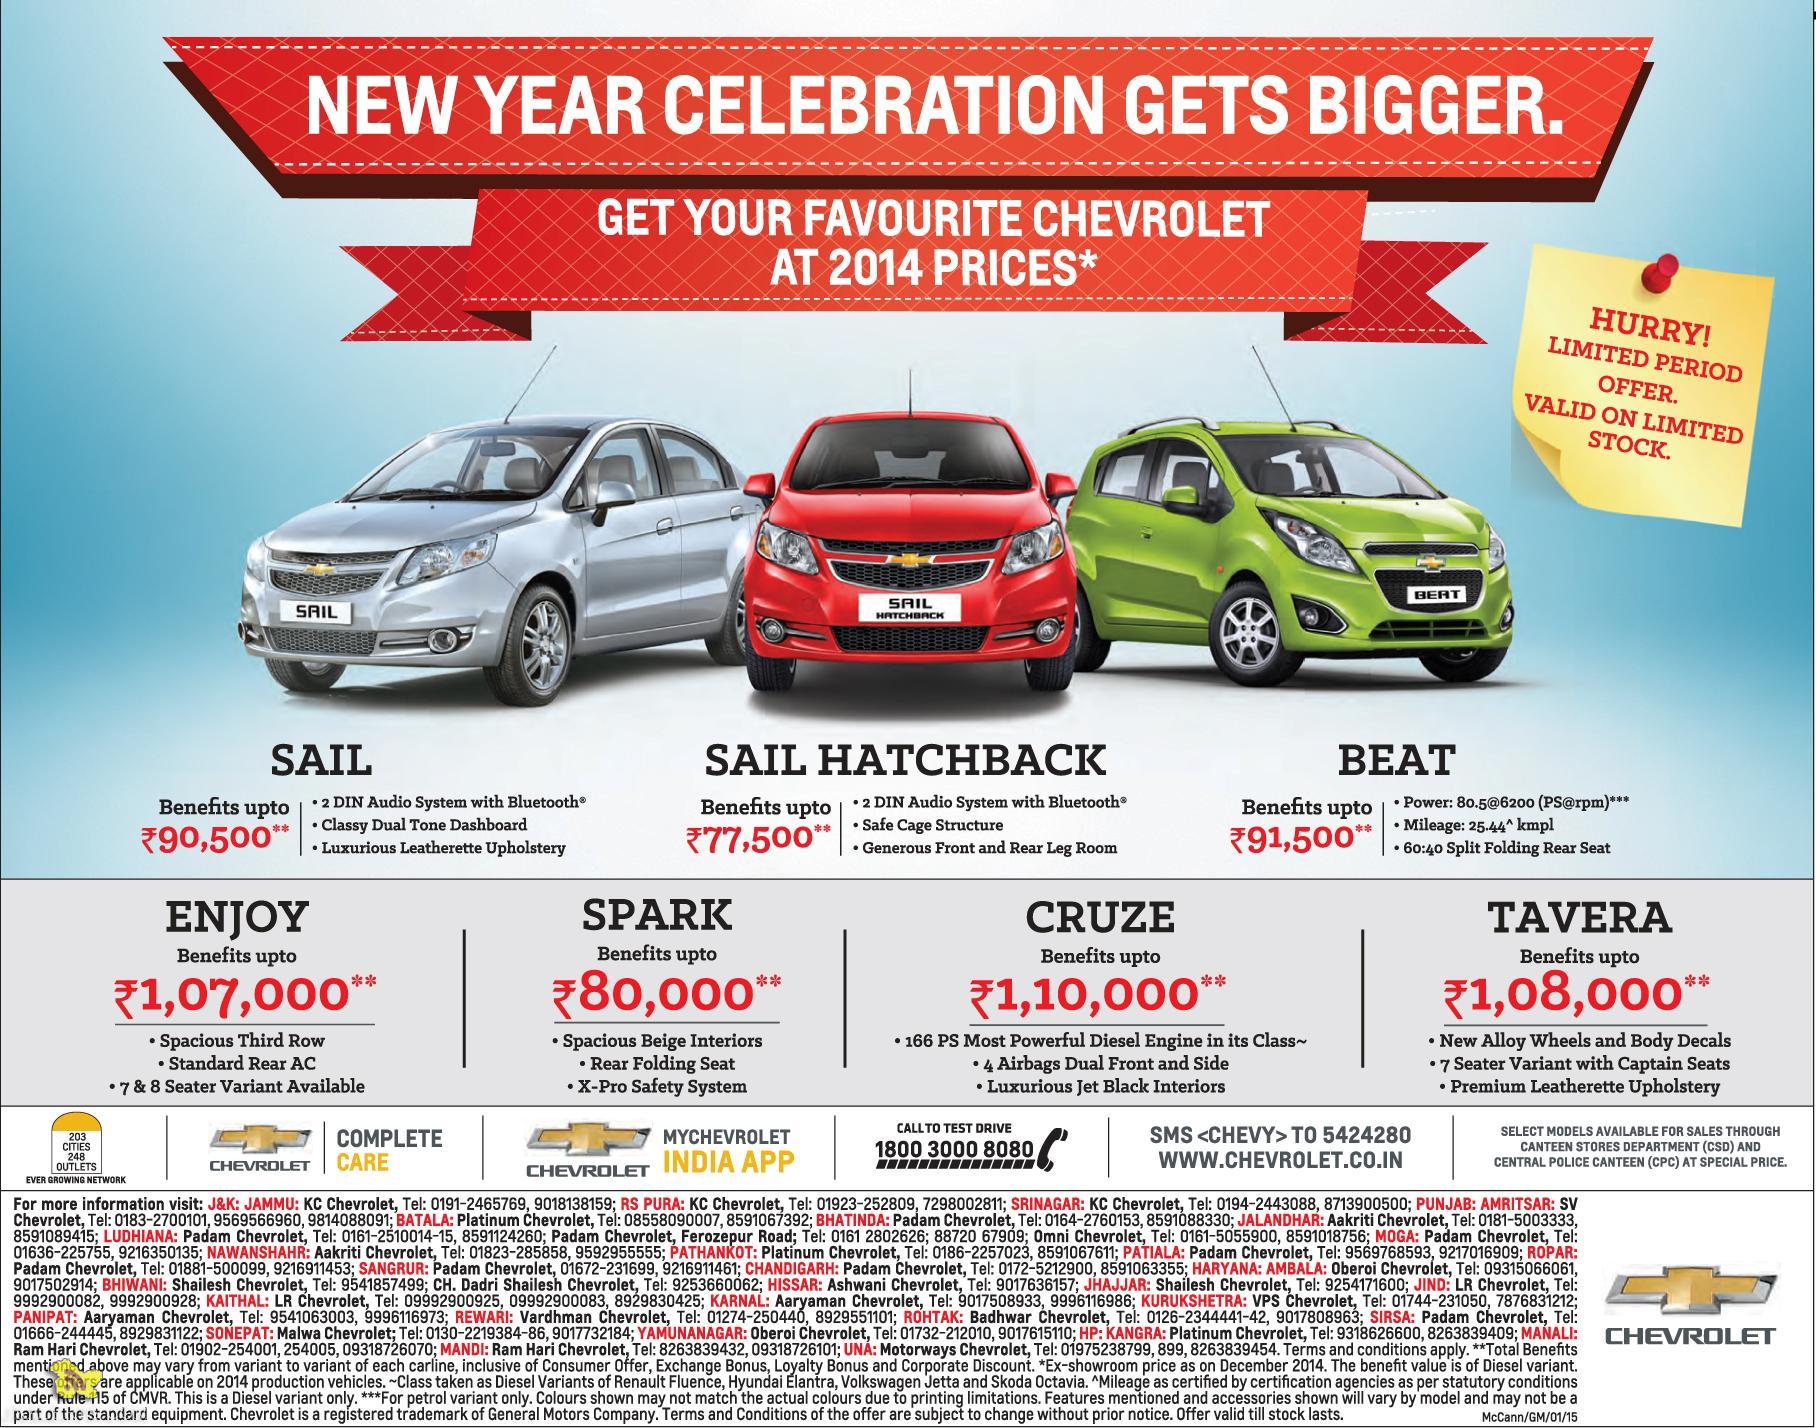 New Year Celebration Gets Bigger, Chevrolet offer